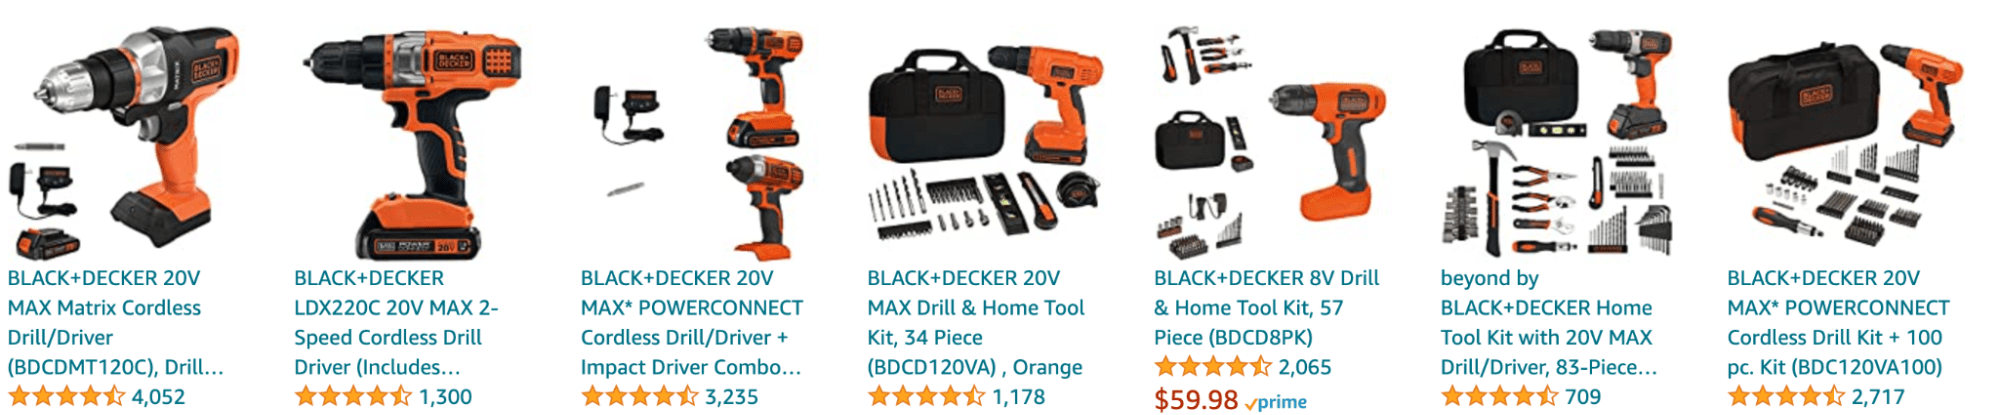 BLACK+DECKER 20V MAX* POWERCONNECT Cordless Drill Kit + 100 pc. Kit  (BDC120VA100), Orange